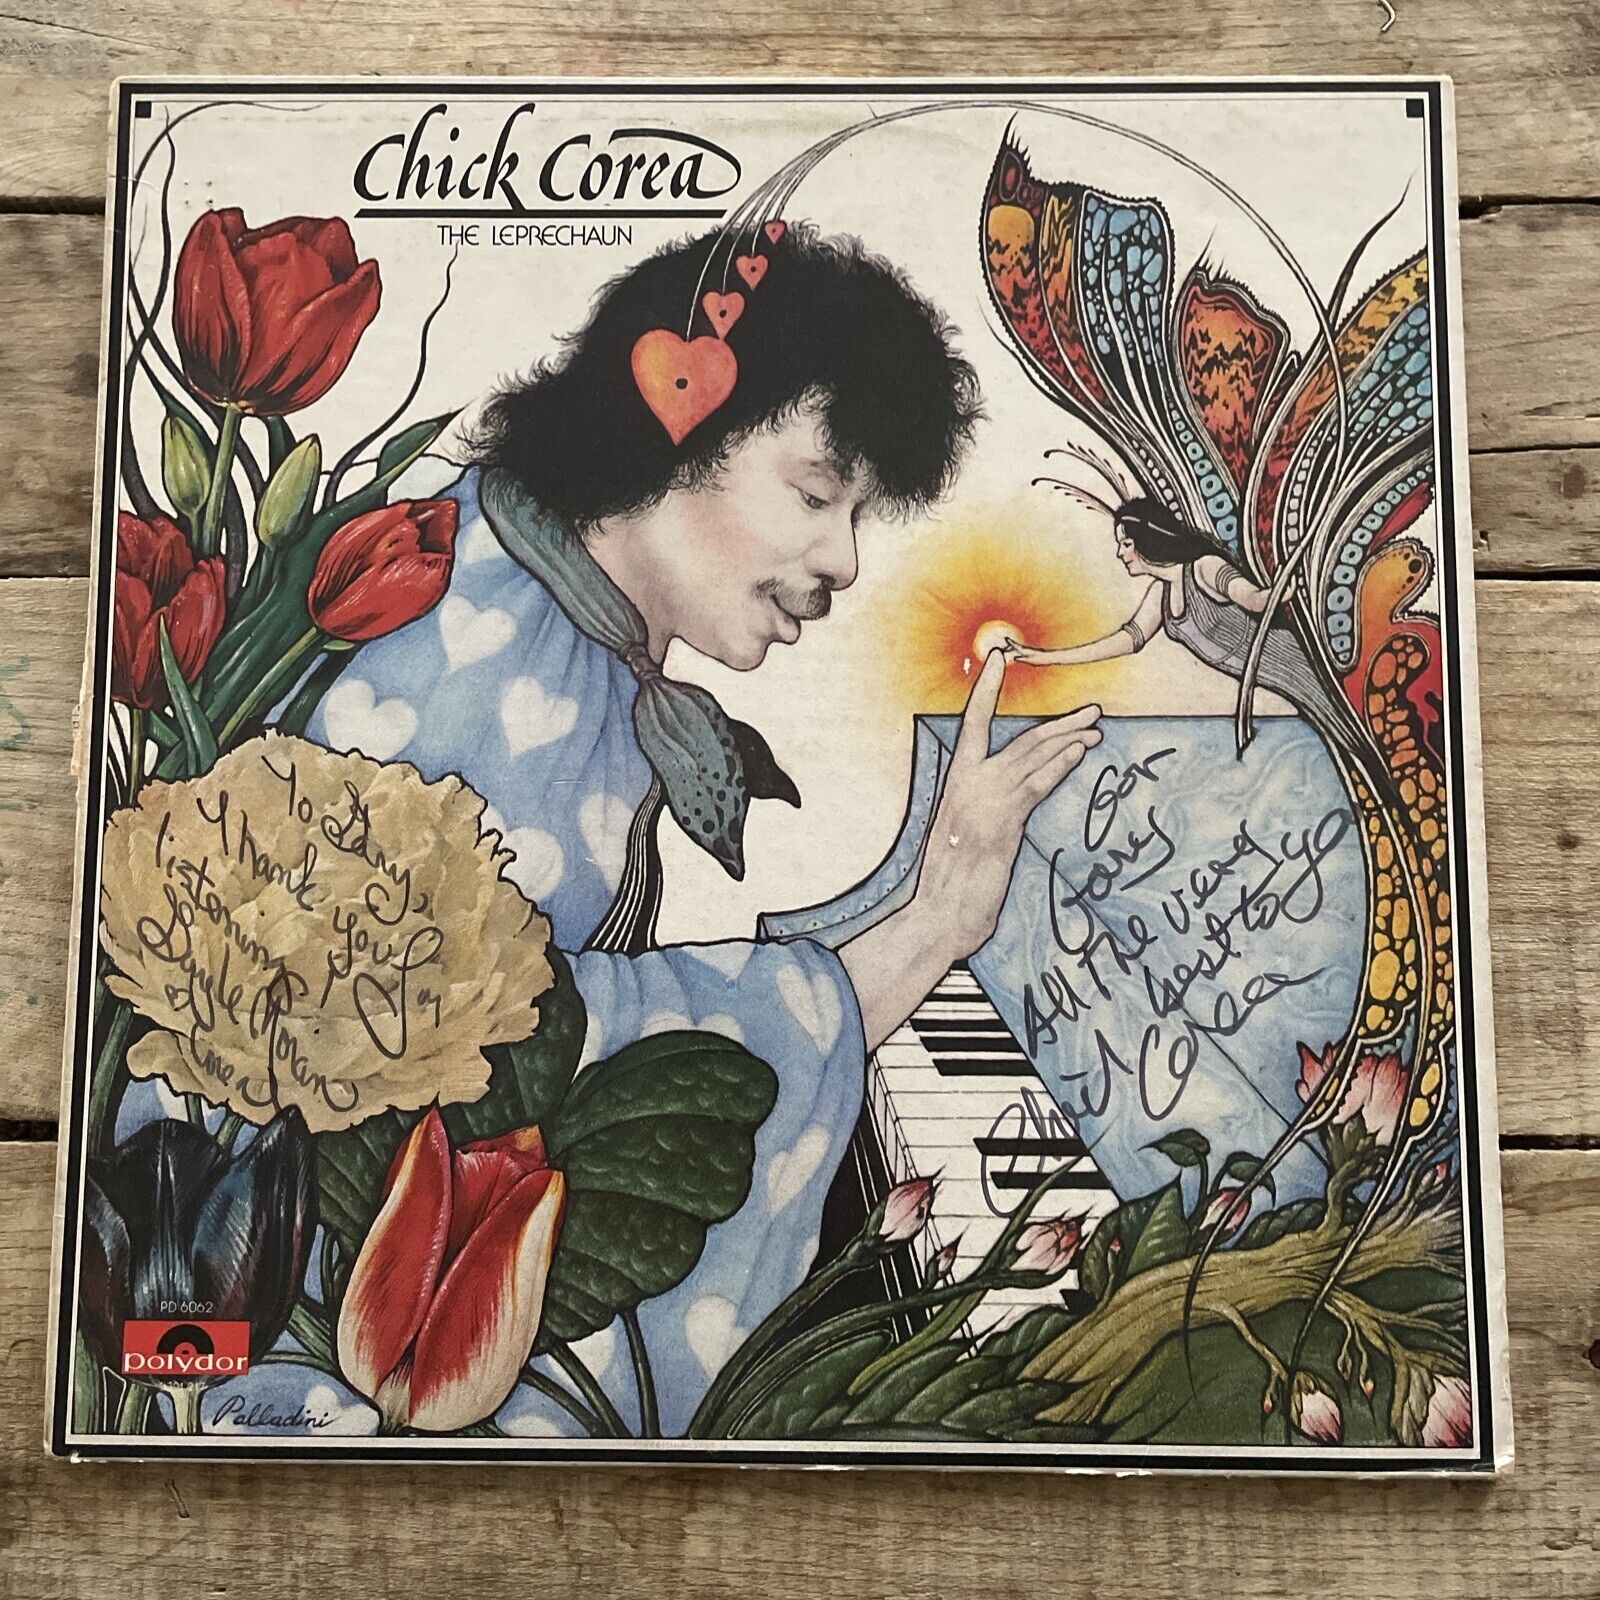 Chick Corea - The Leprechaun Vinyl LP - 1976 First Press - PD 6062 signed